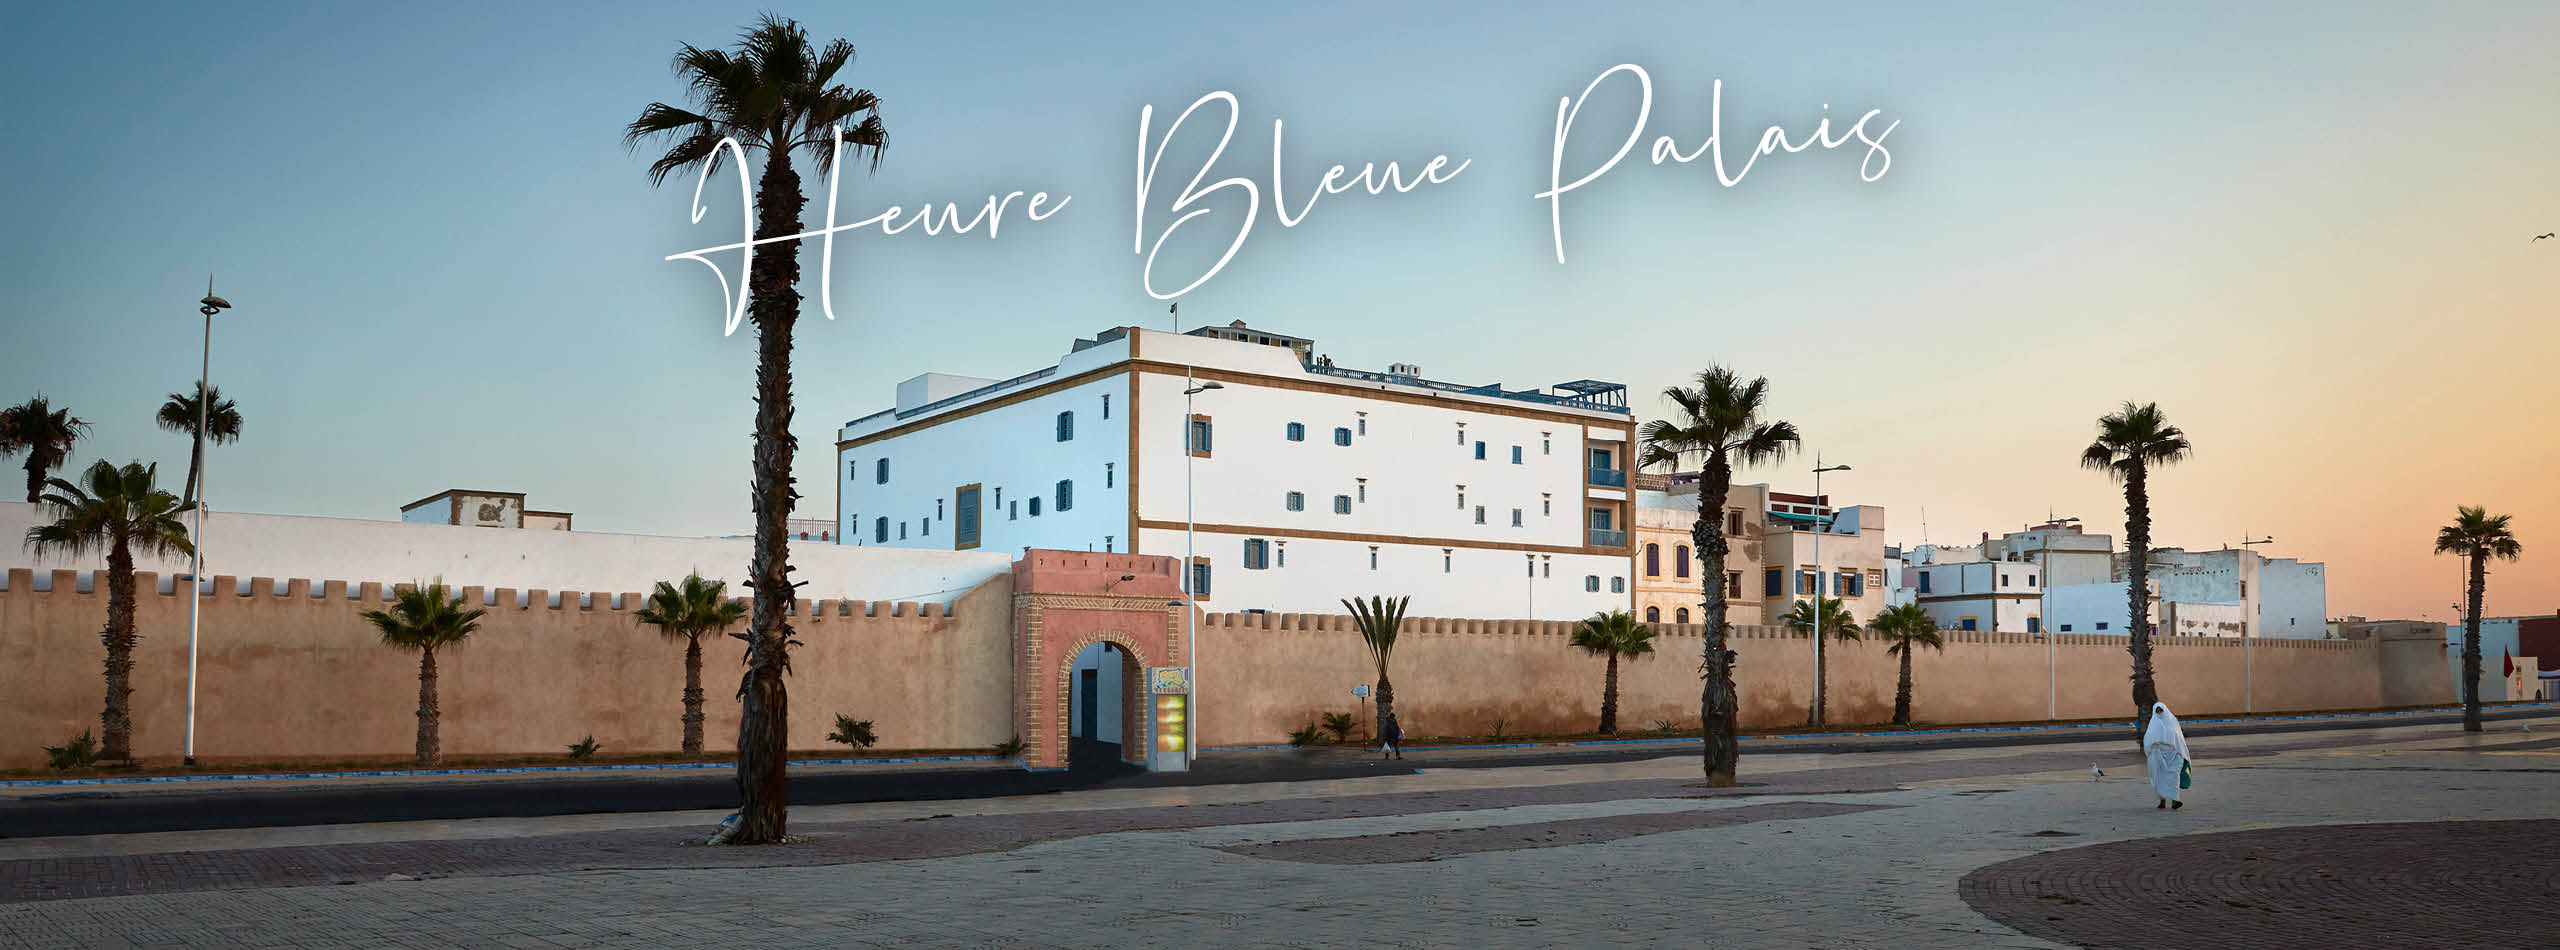 Niche Destinatons hotel collection Heure Bleue Palais Essaouira Morocco 